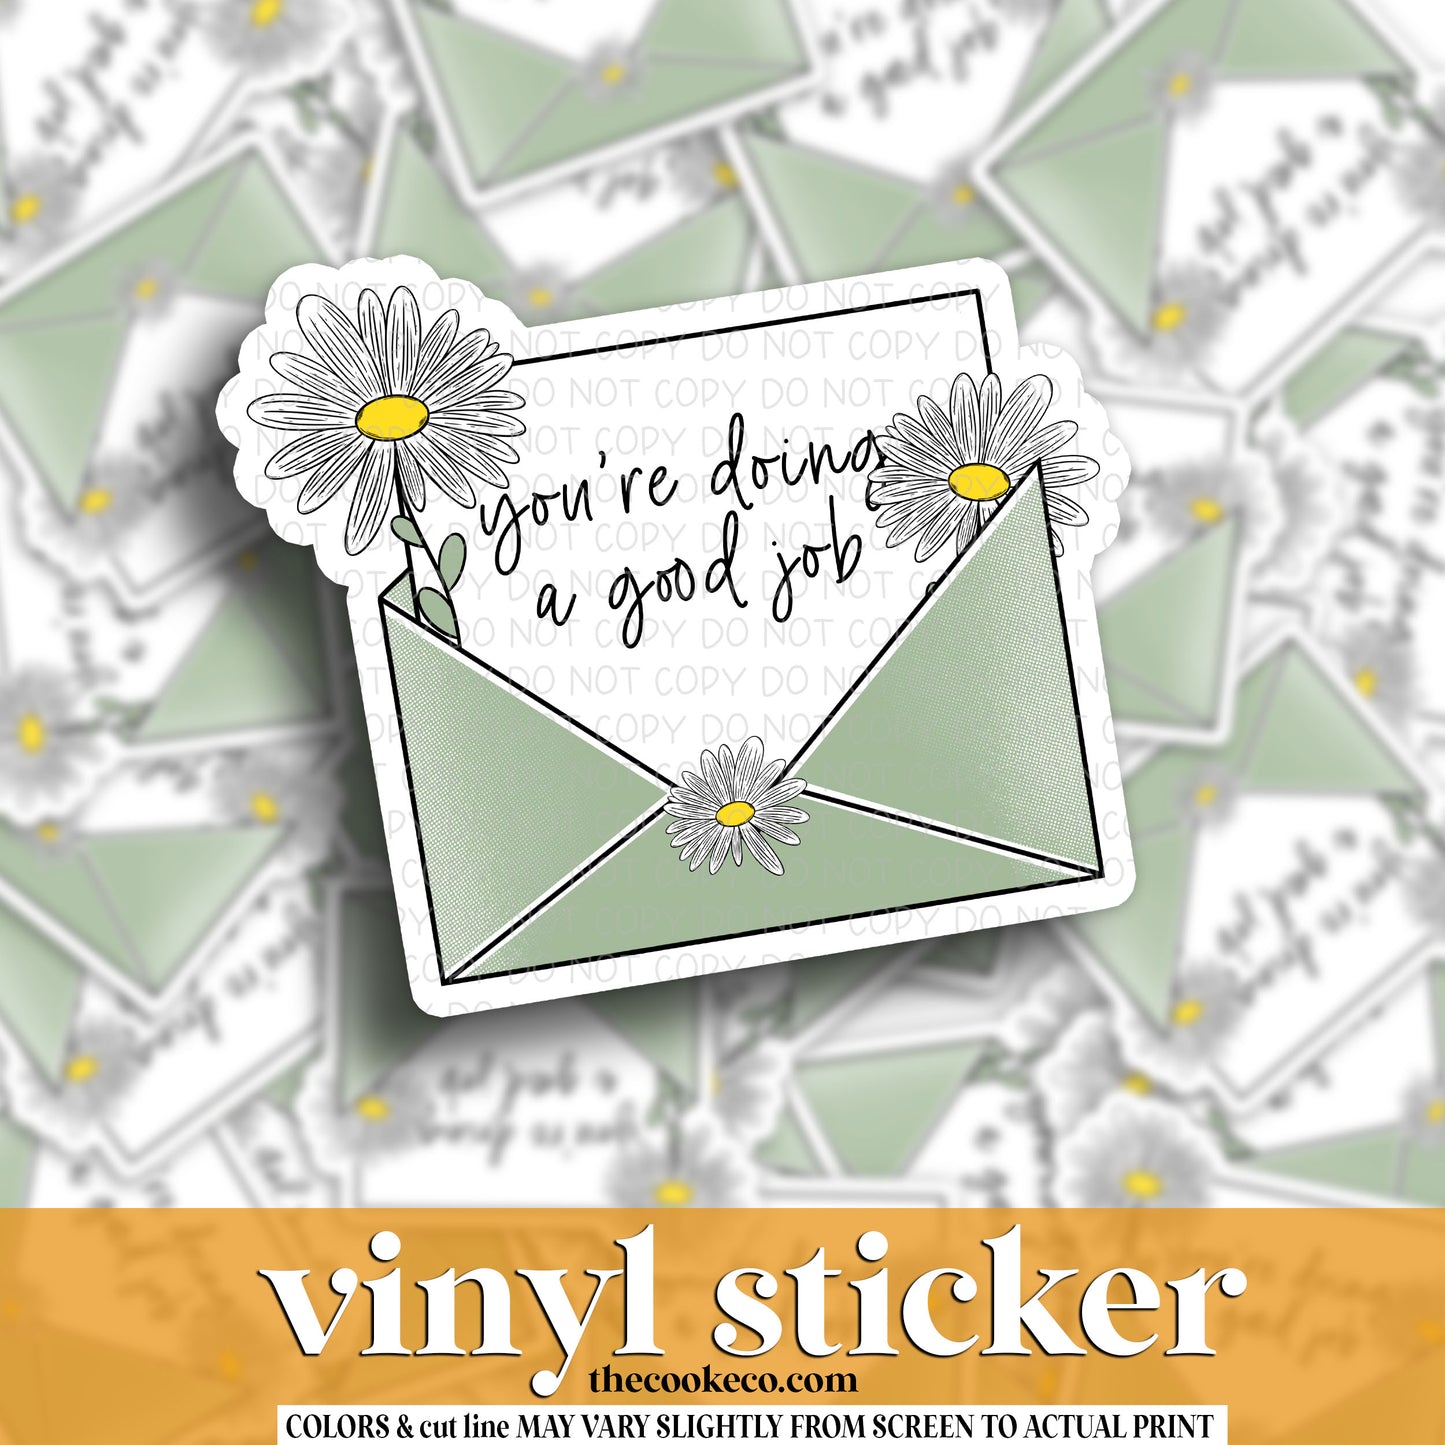 Vinyl Sticker | #V1374 - YOU'RE DOING A GOOD JOB